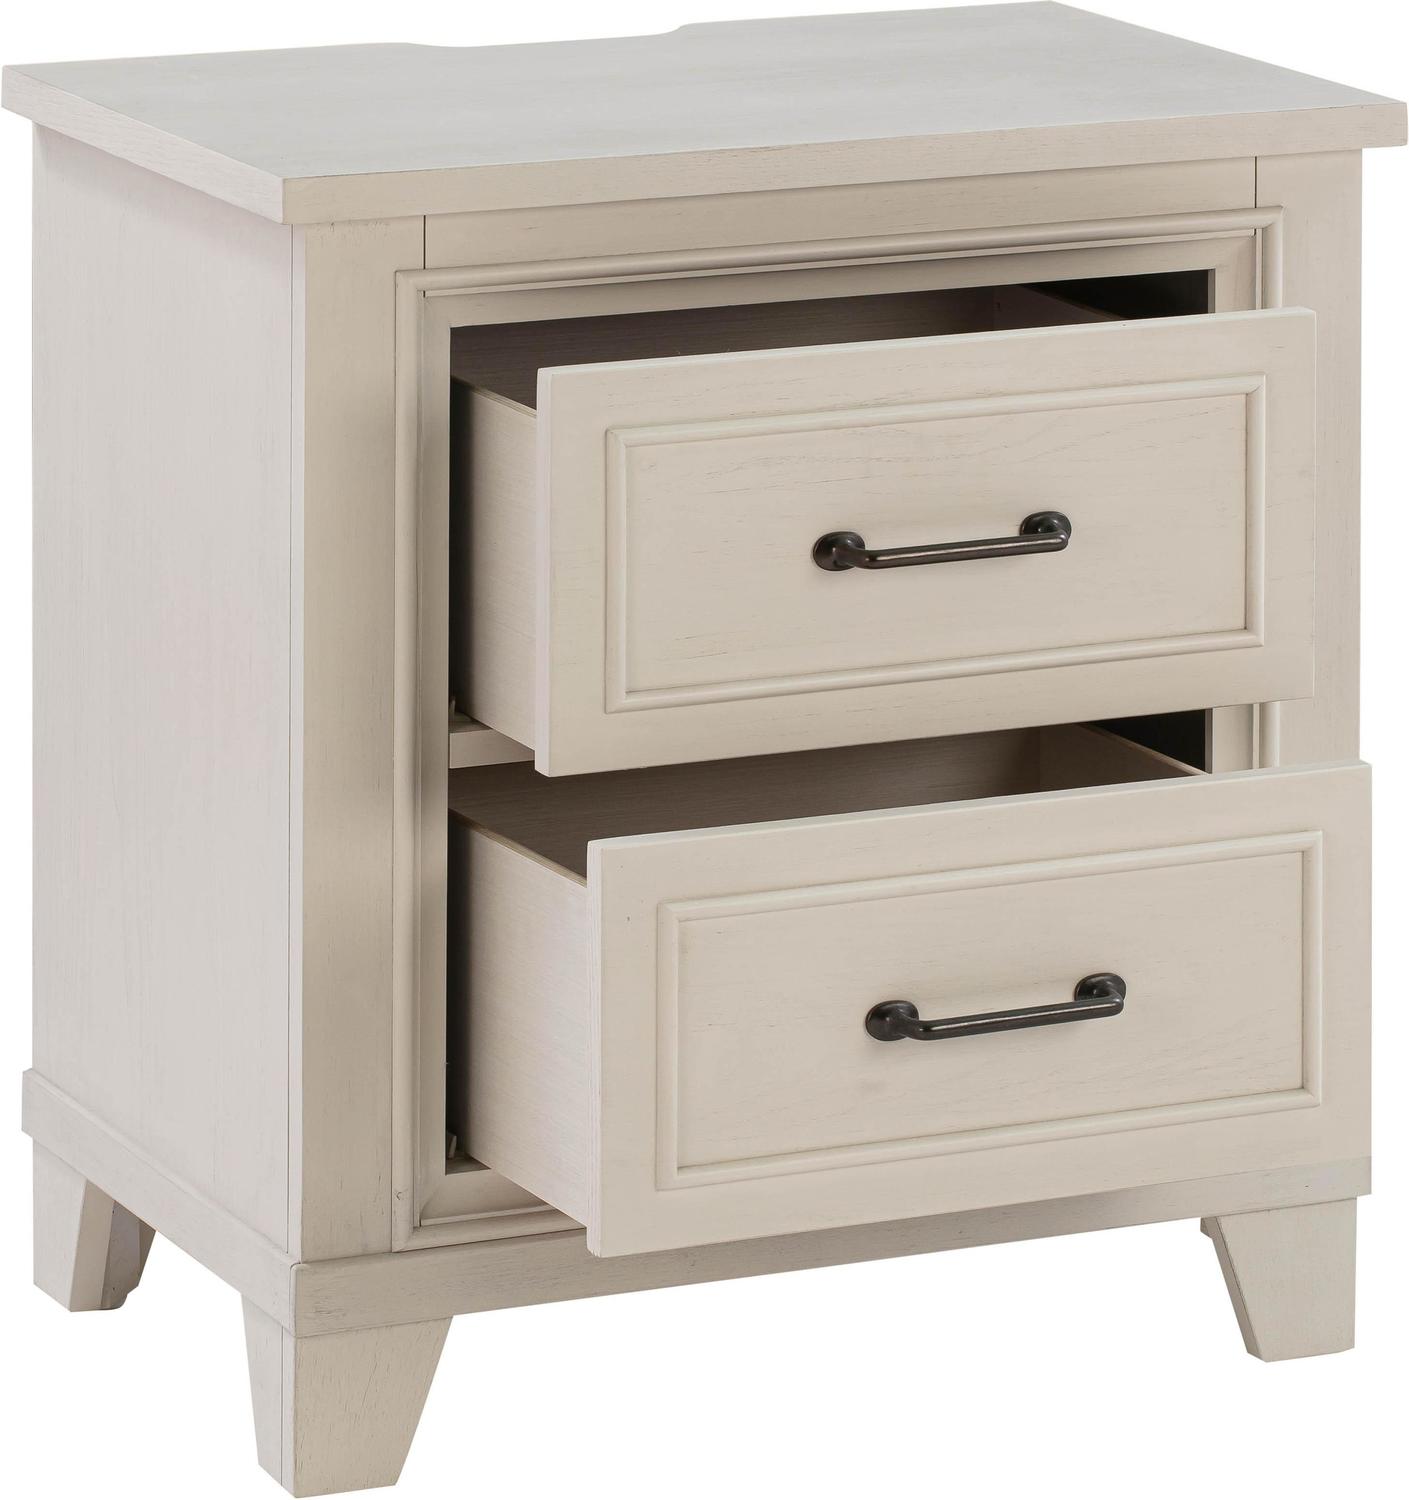 bedside drawers set of 2 Tov Furniture Nightstands White